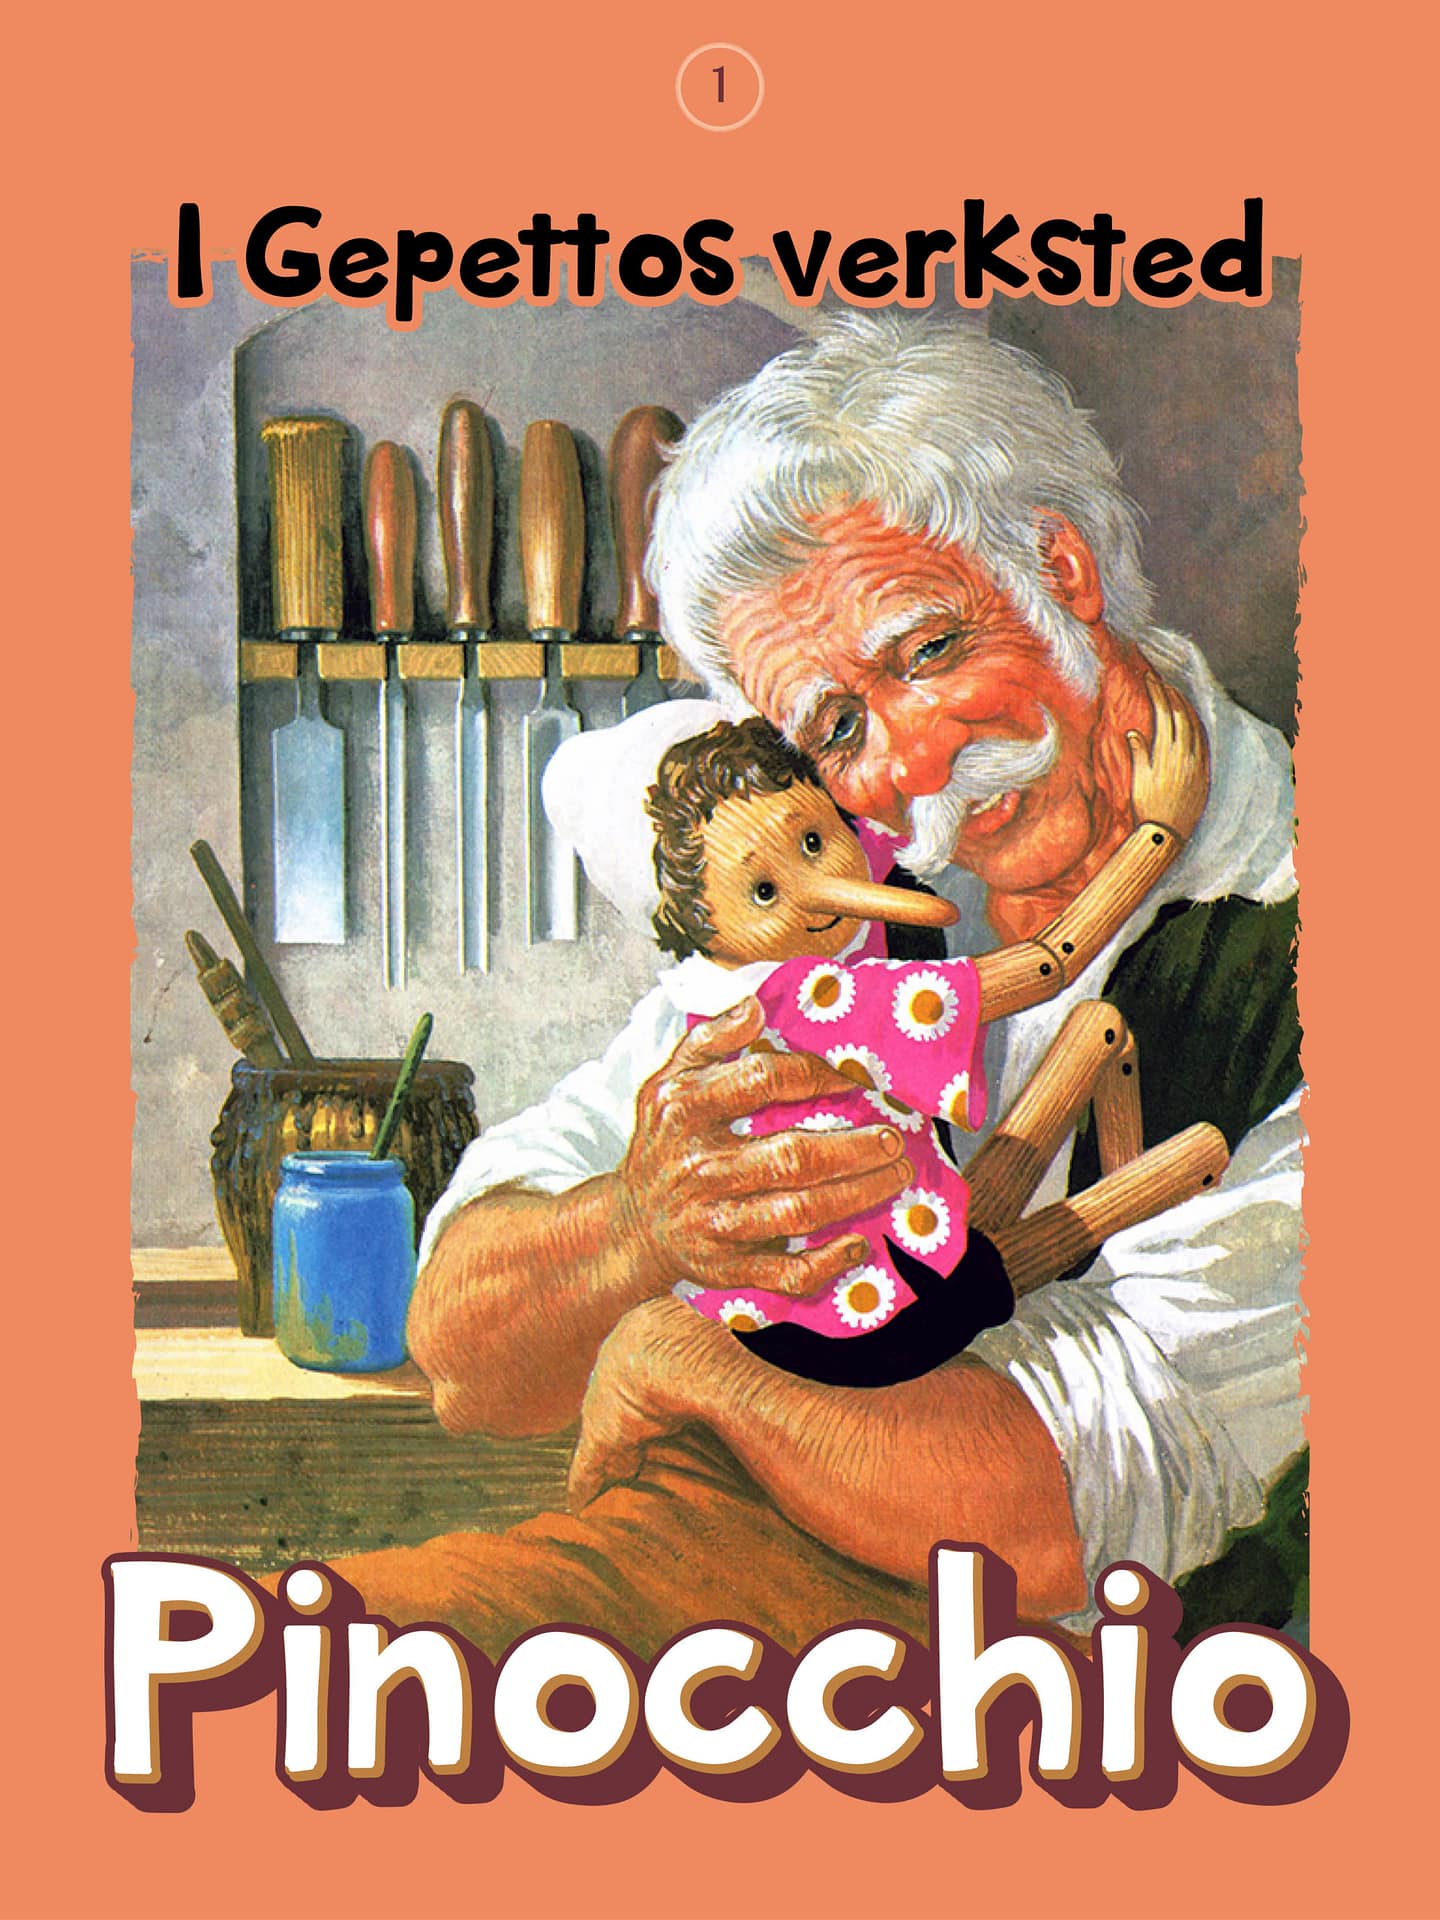 Pinocchio del 1, I Gepettos verksted